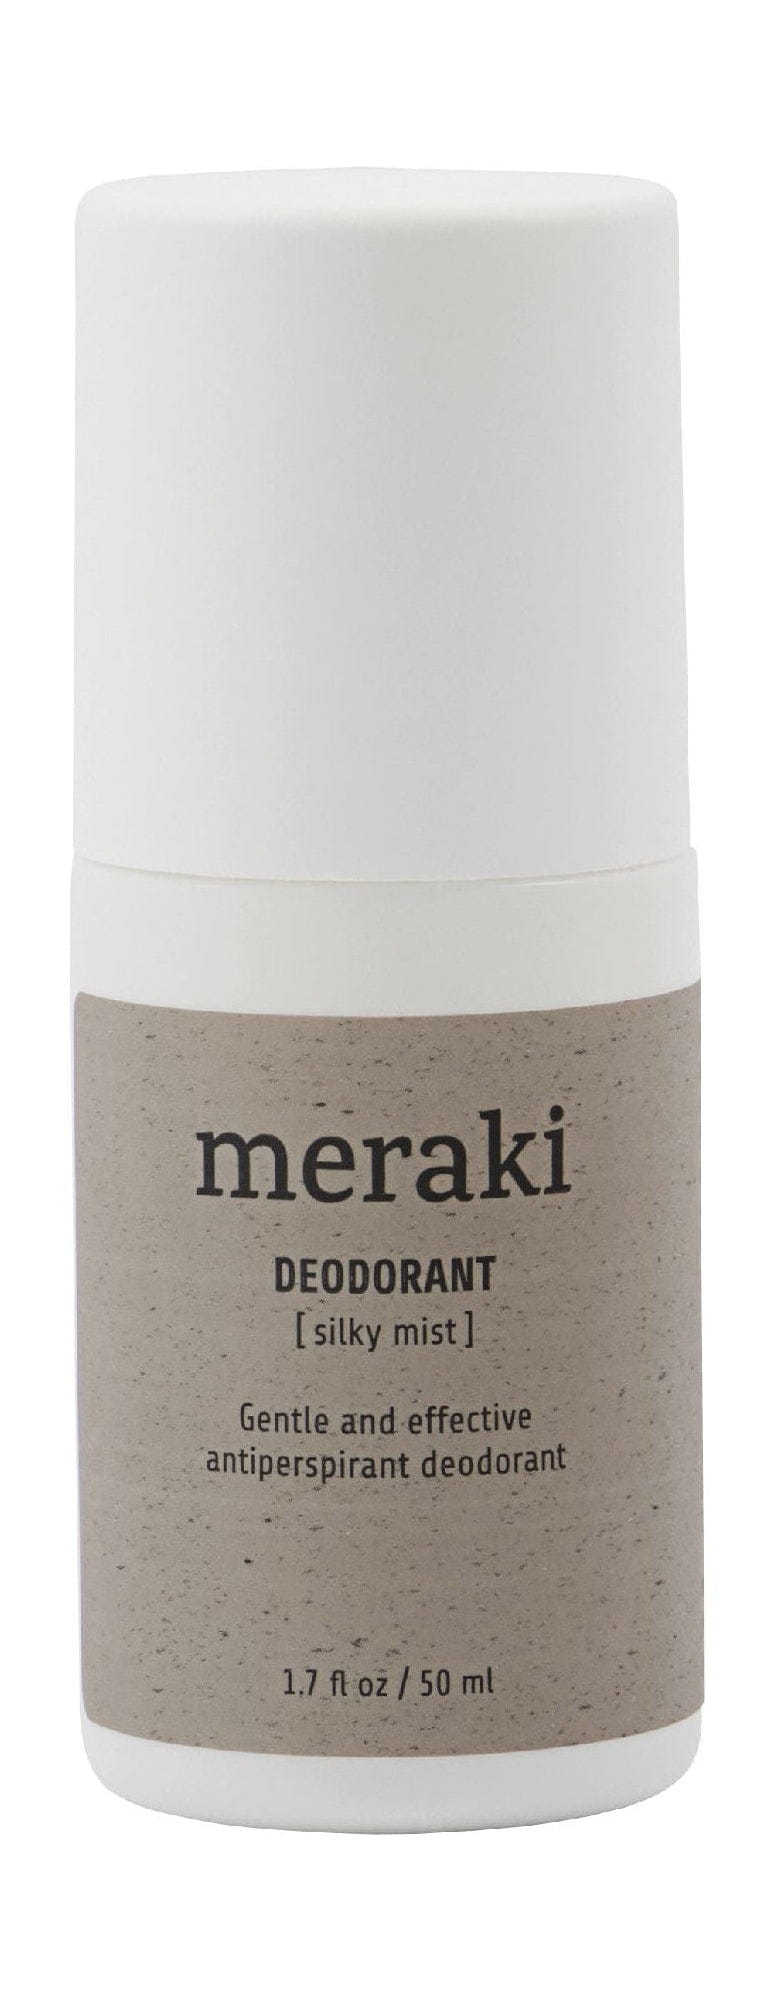 Deodorante Meraki 50 ml, nebbia seta